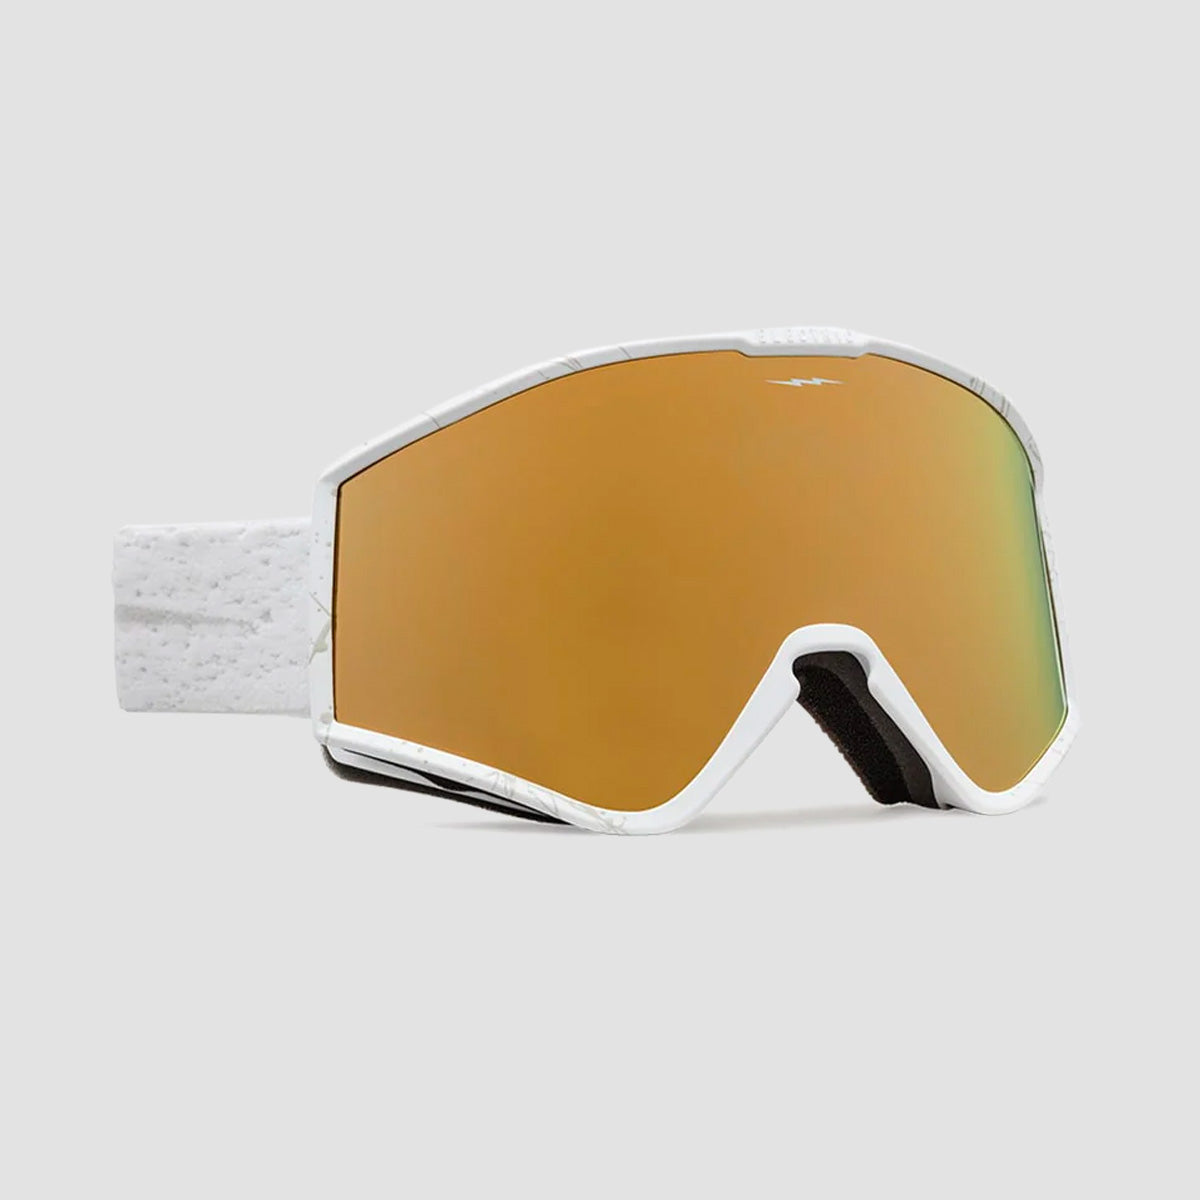 Electric Kleveland Small Snow Goggles Matte Speckled White/Gold Chrome With Bonus Lense